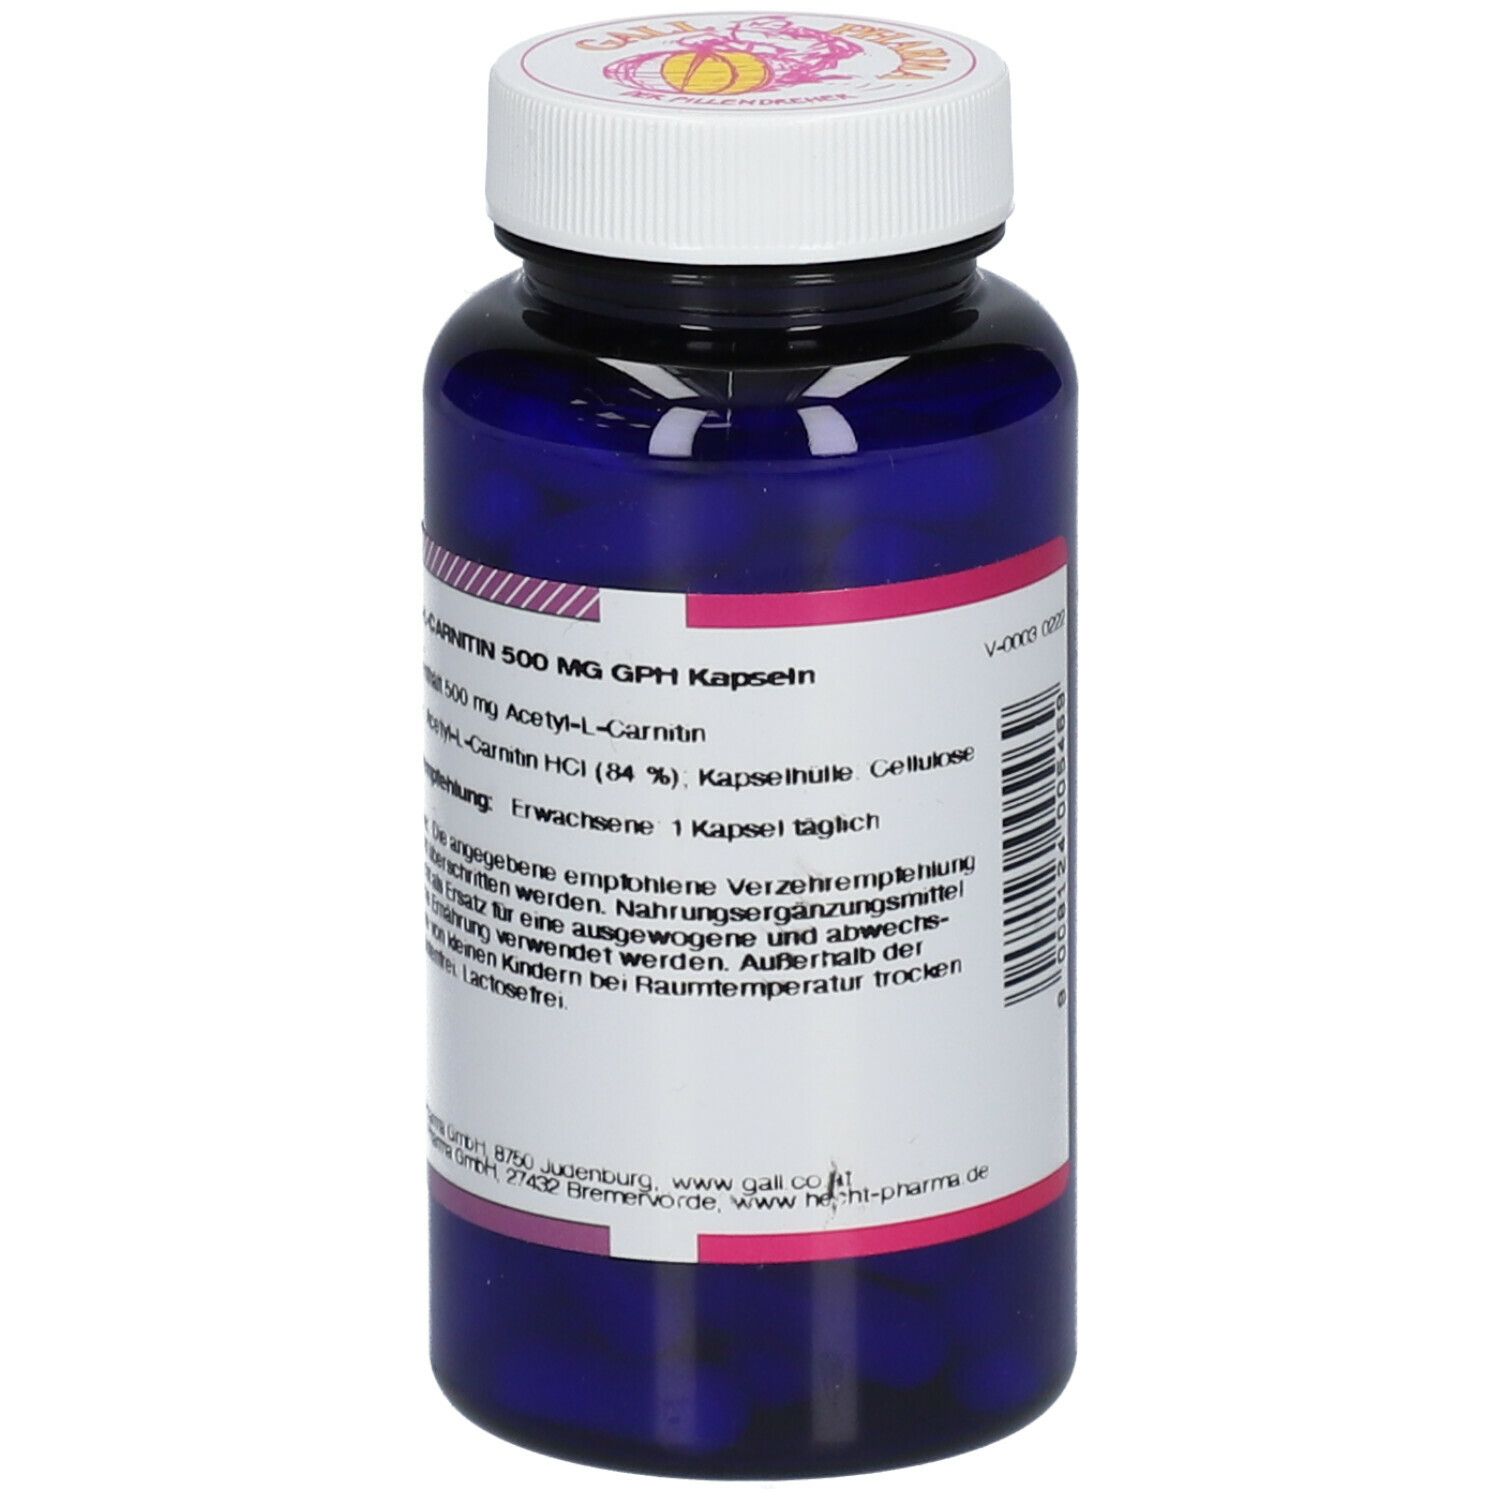 GALL PHARMA Acetyl-L-Carnitin 500 mg GPH Kapseln